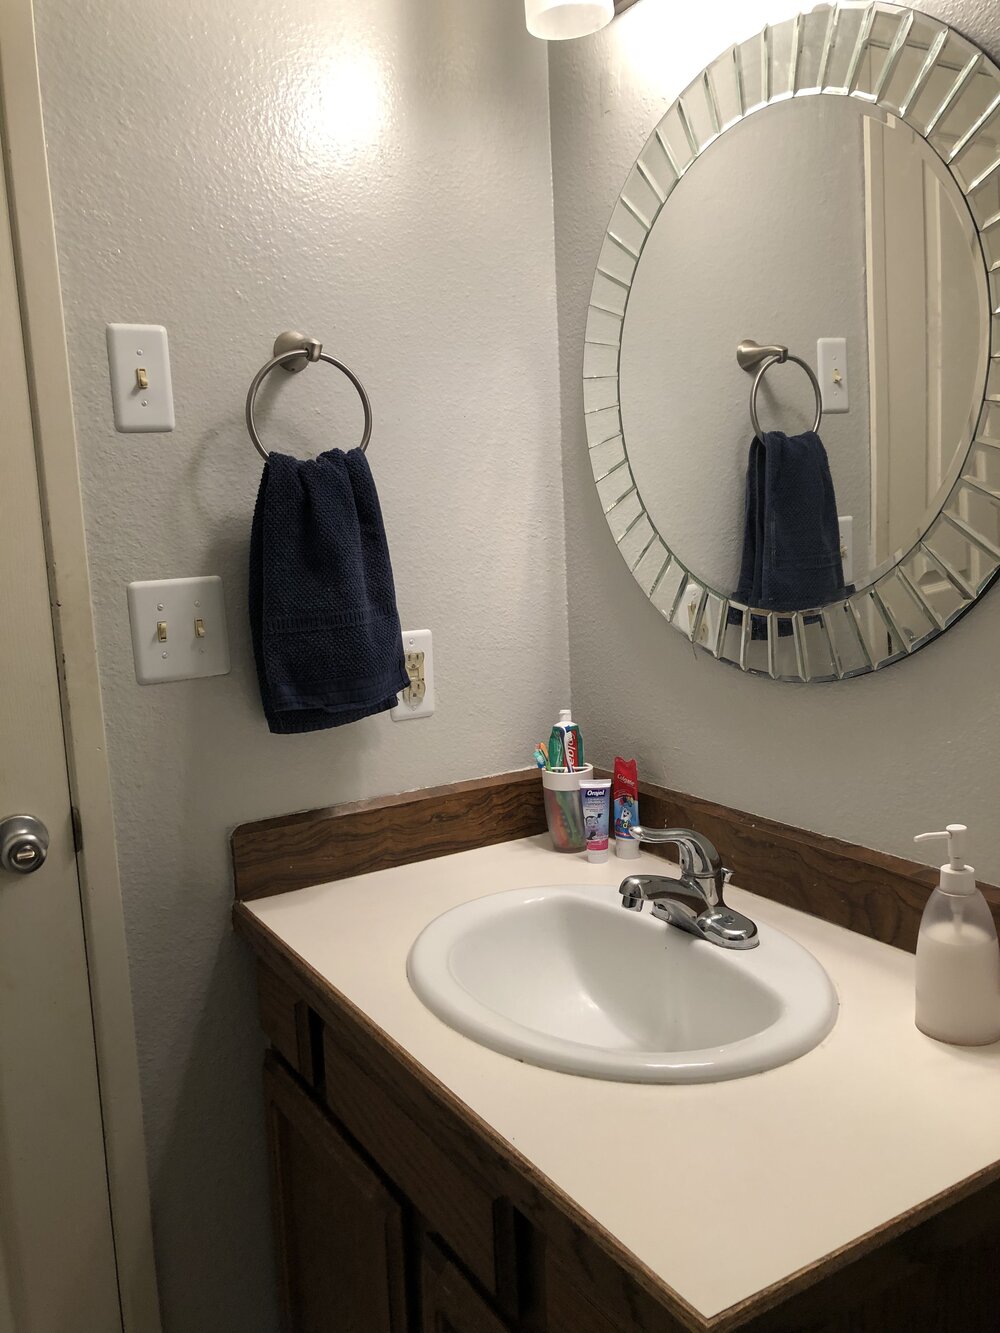 *IMG_6864- mirror- counter- towel.jpg